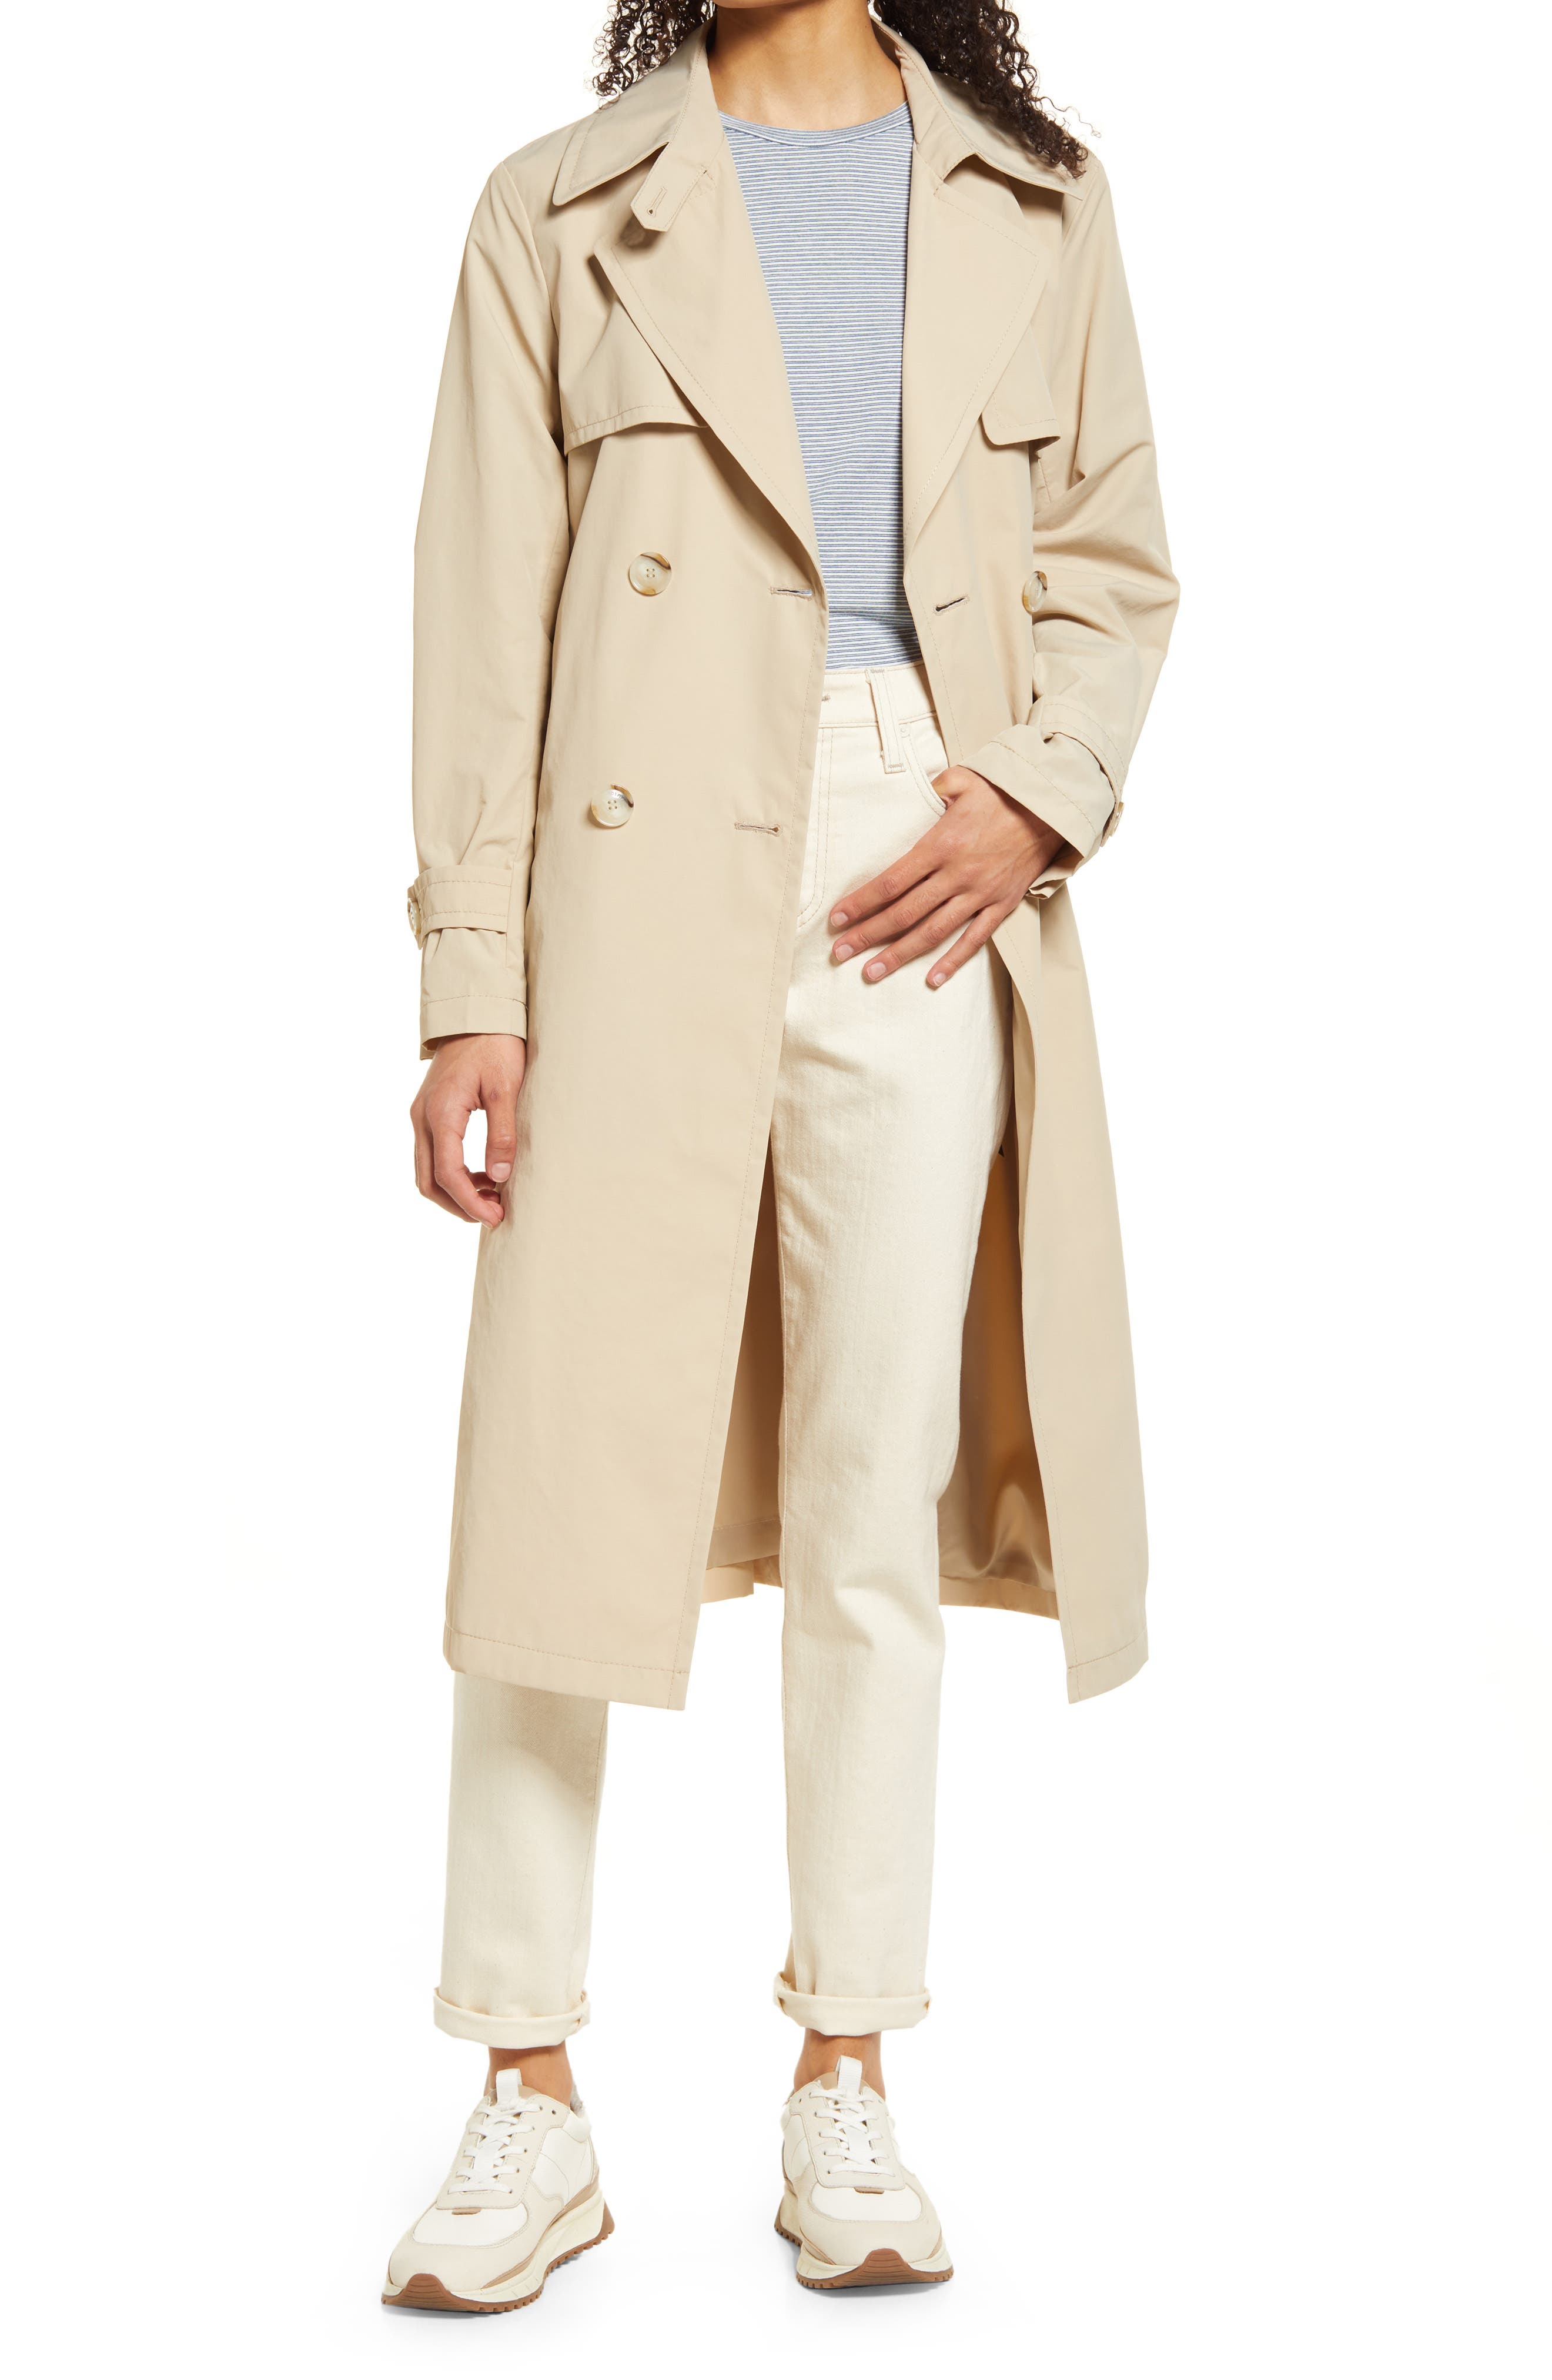 Women's Overcoat Garment 100%Real Just Coming Rabbit Fur Short Coat Jacket 